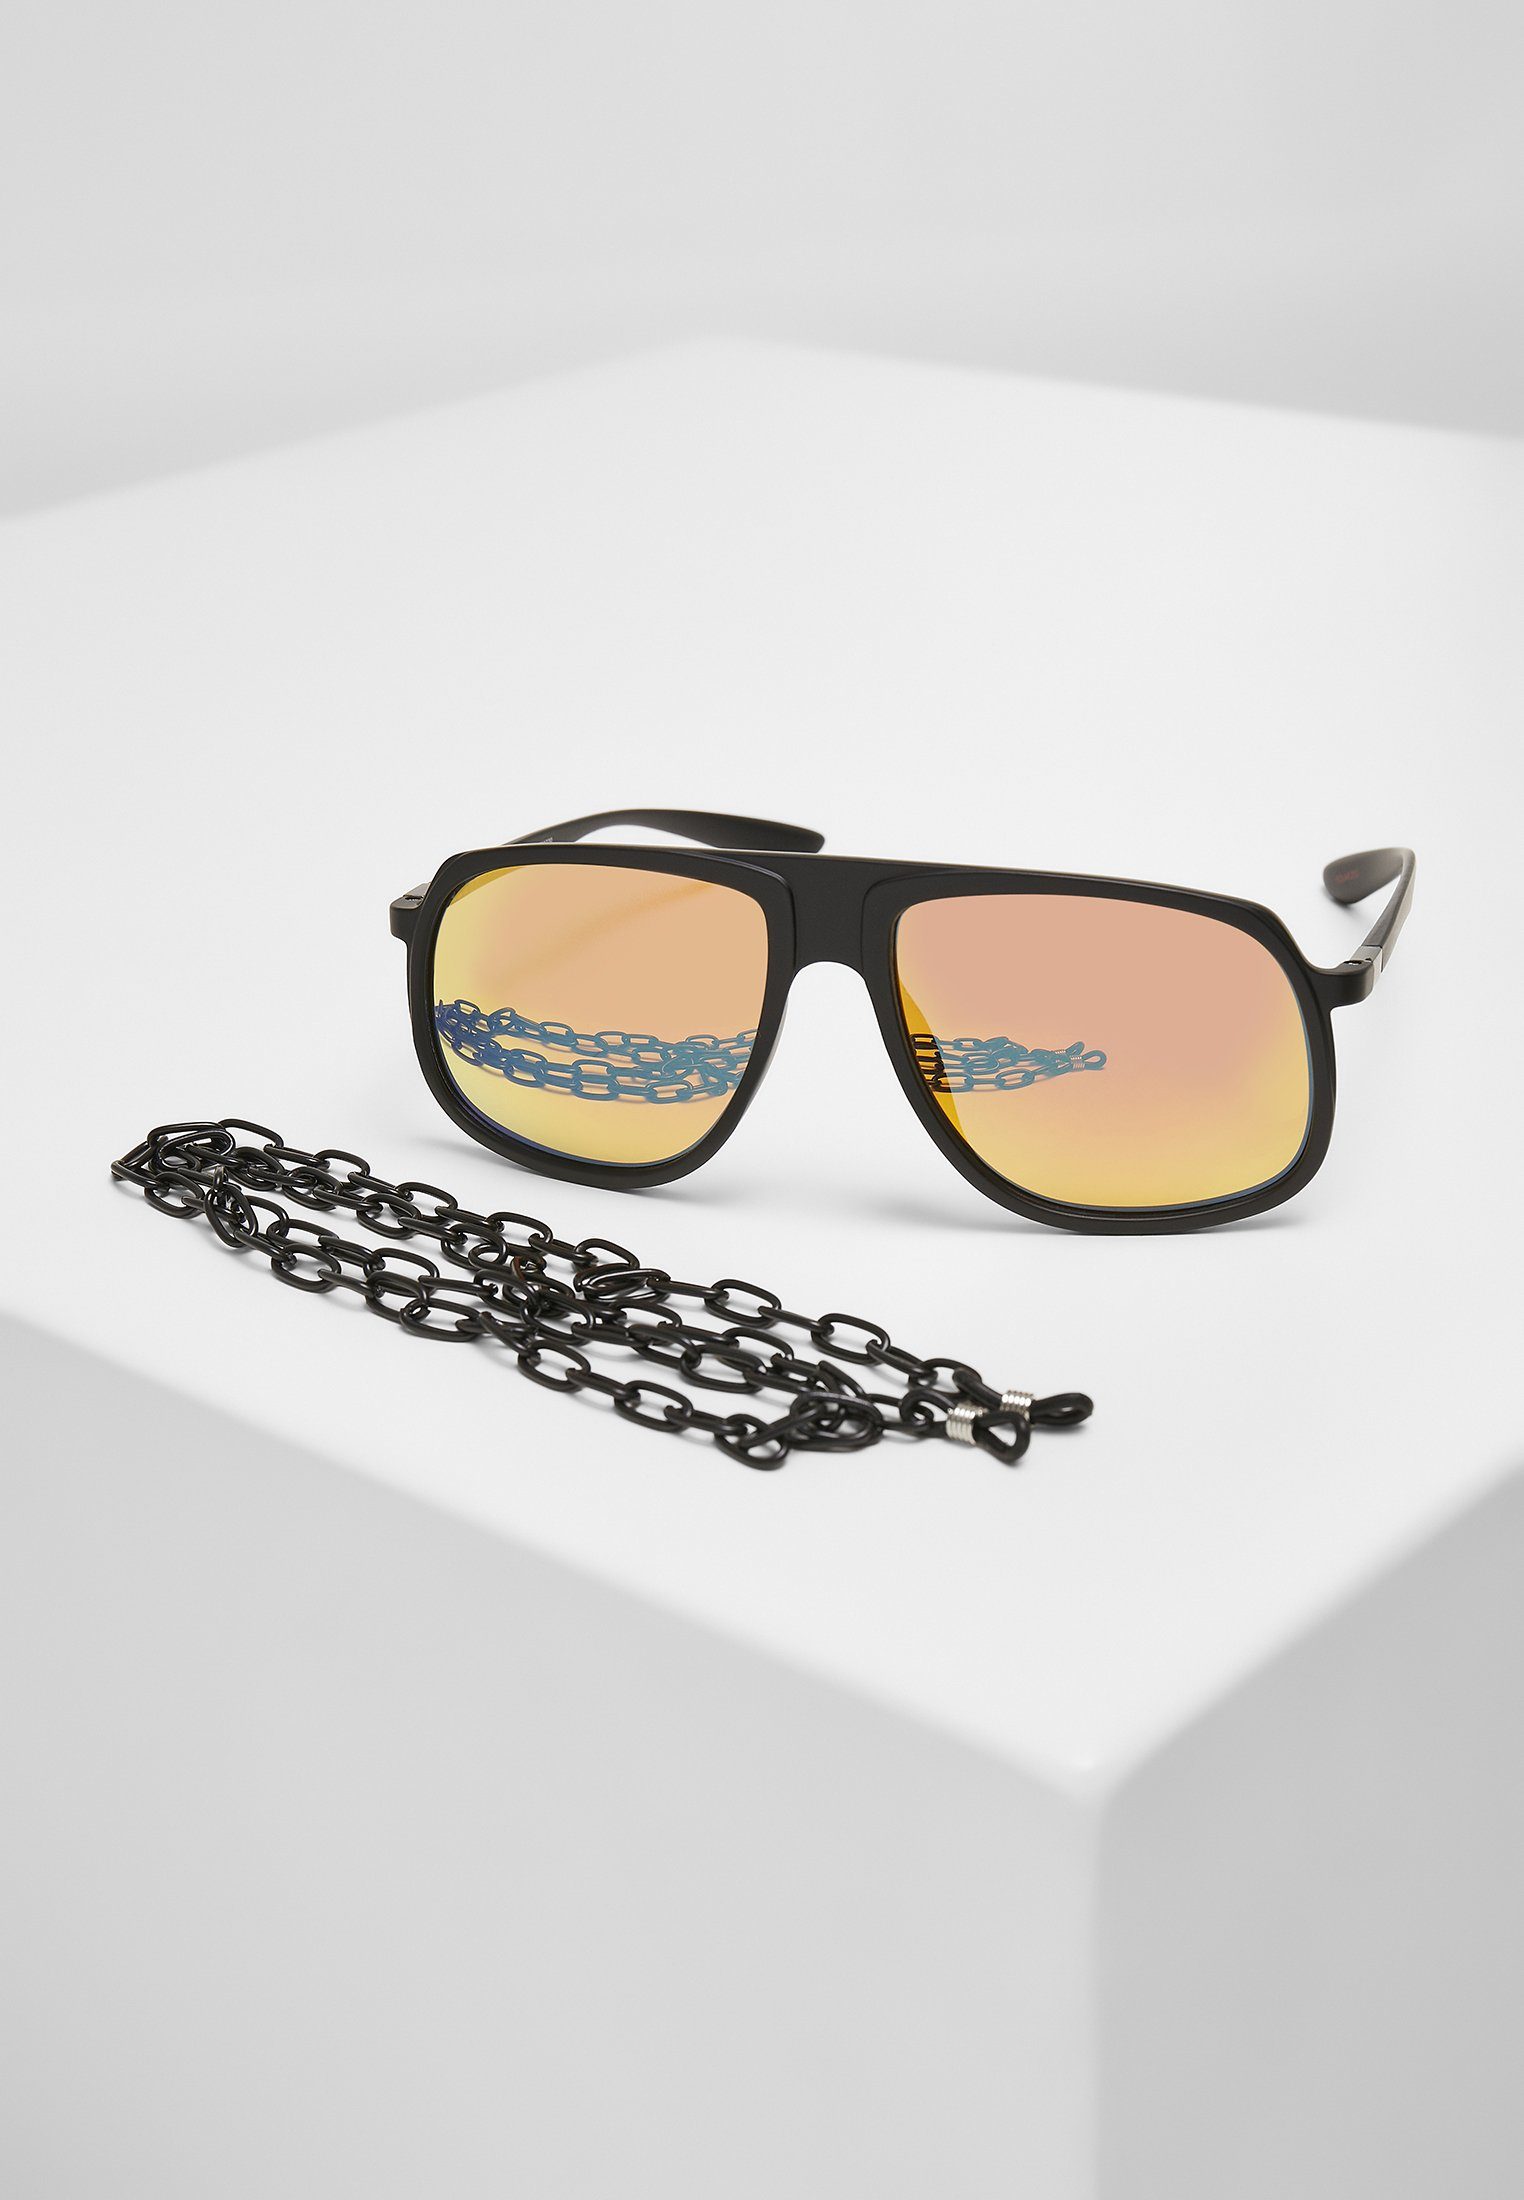 107 Chain URBAN Sonnenbrille Sunglasses Retro CLASSICS Accessoires